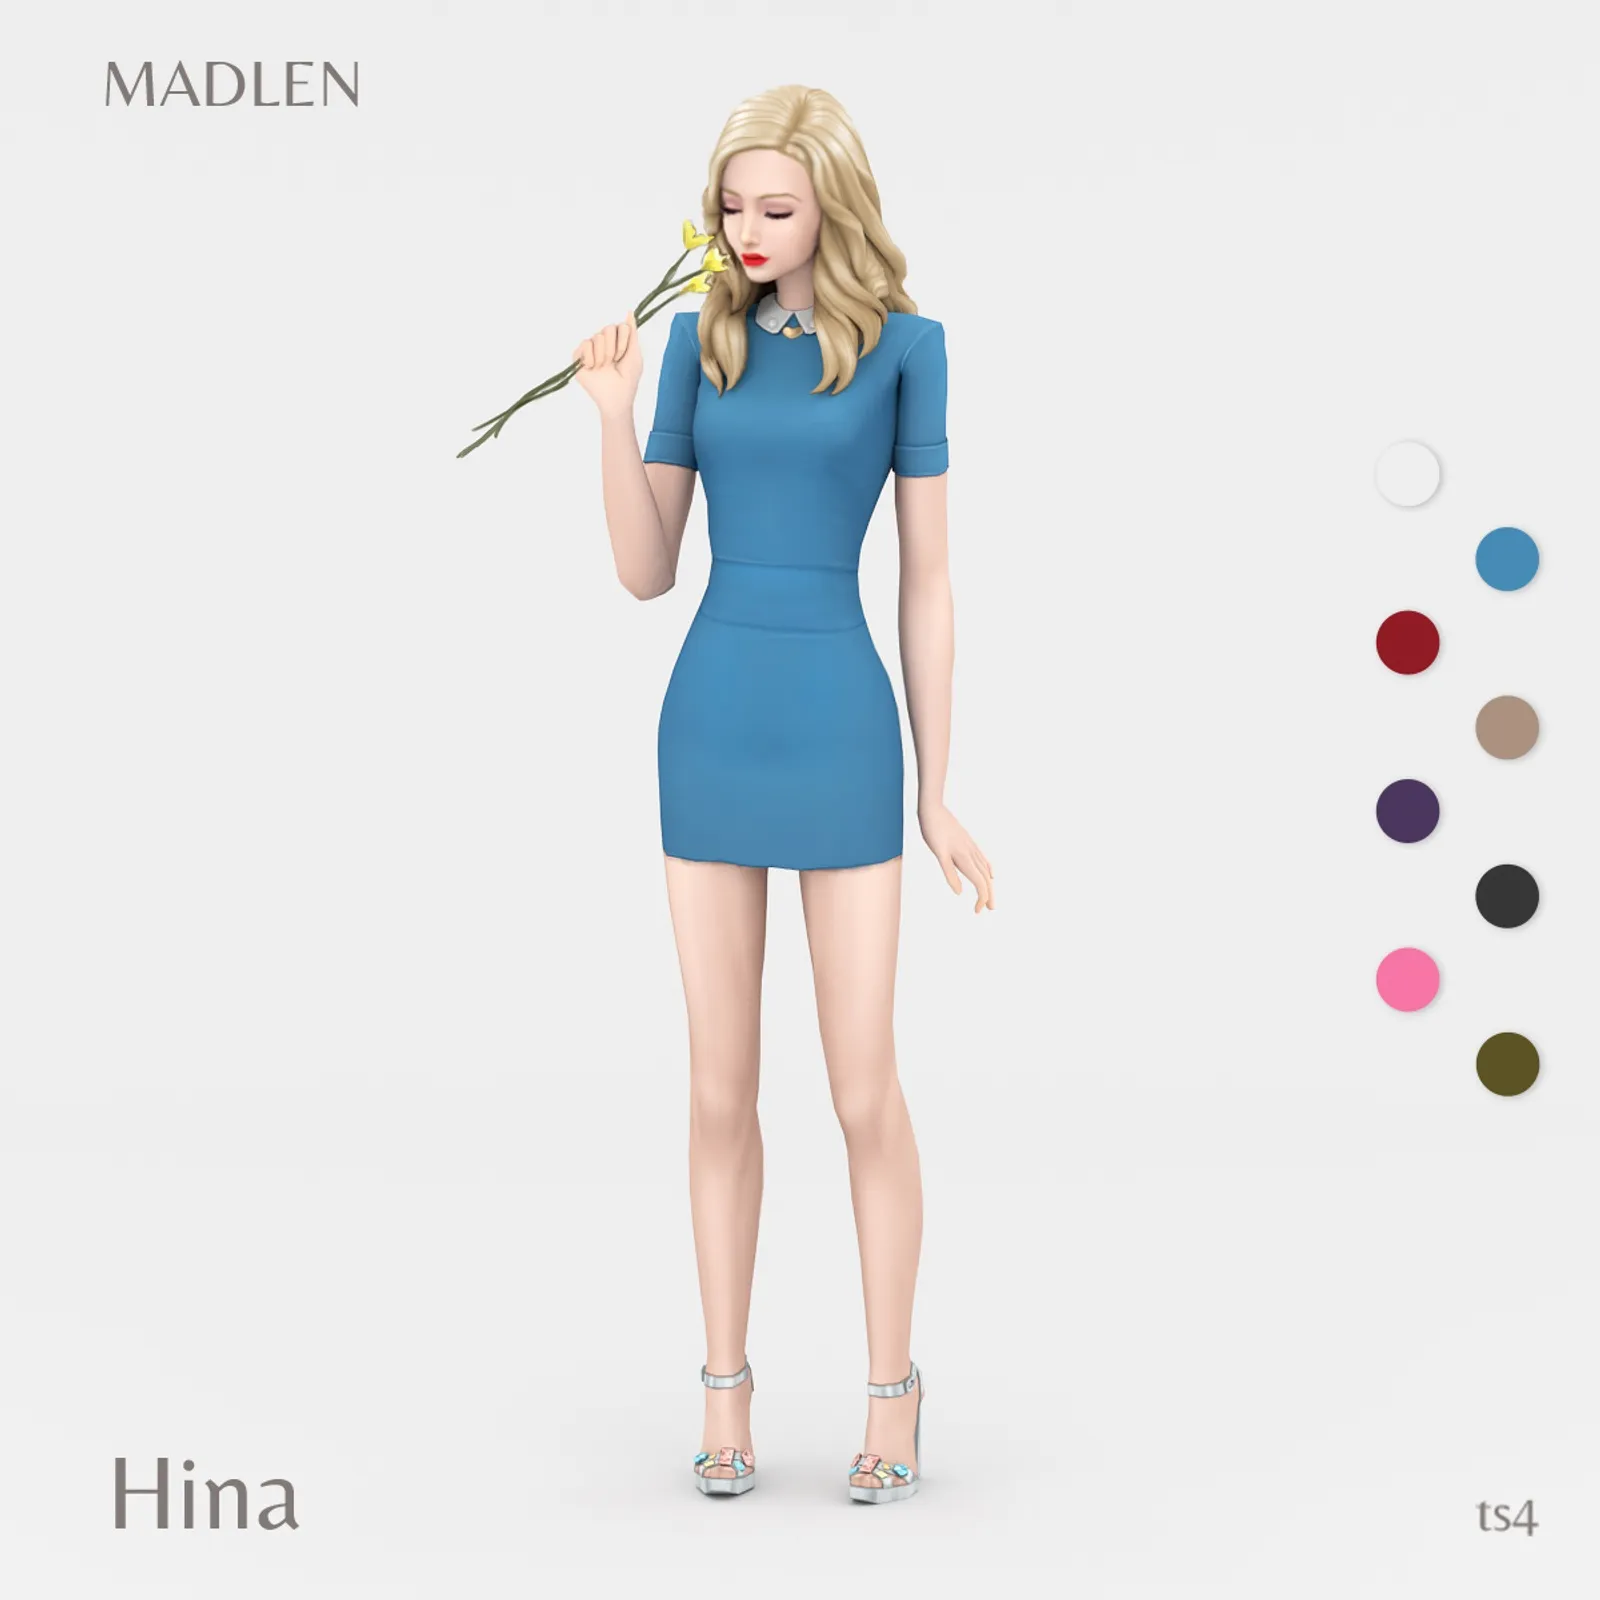 Hina Outfit